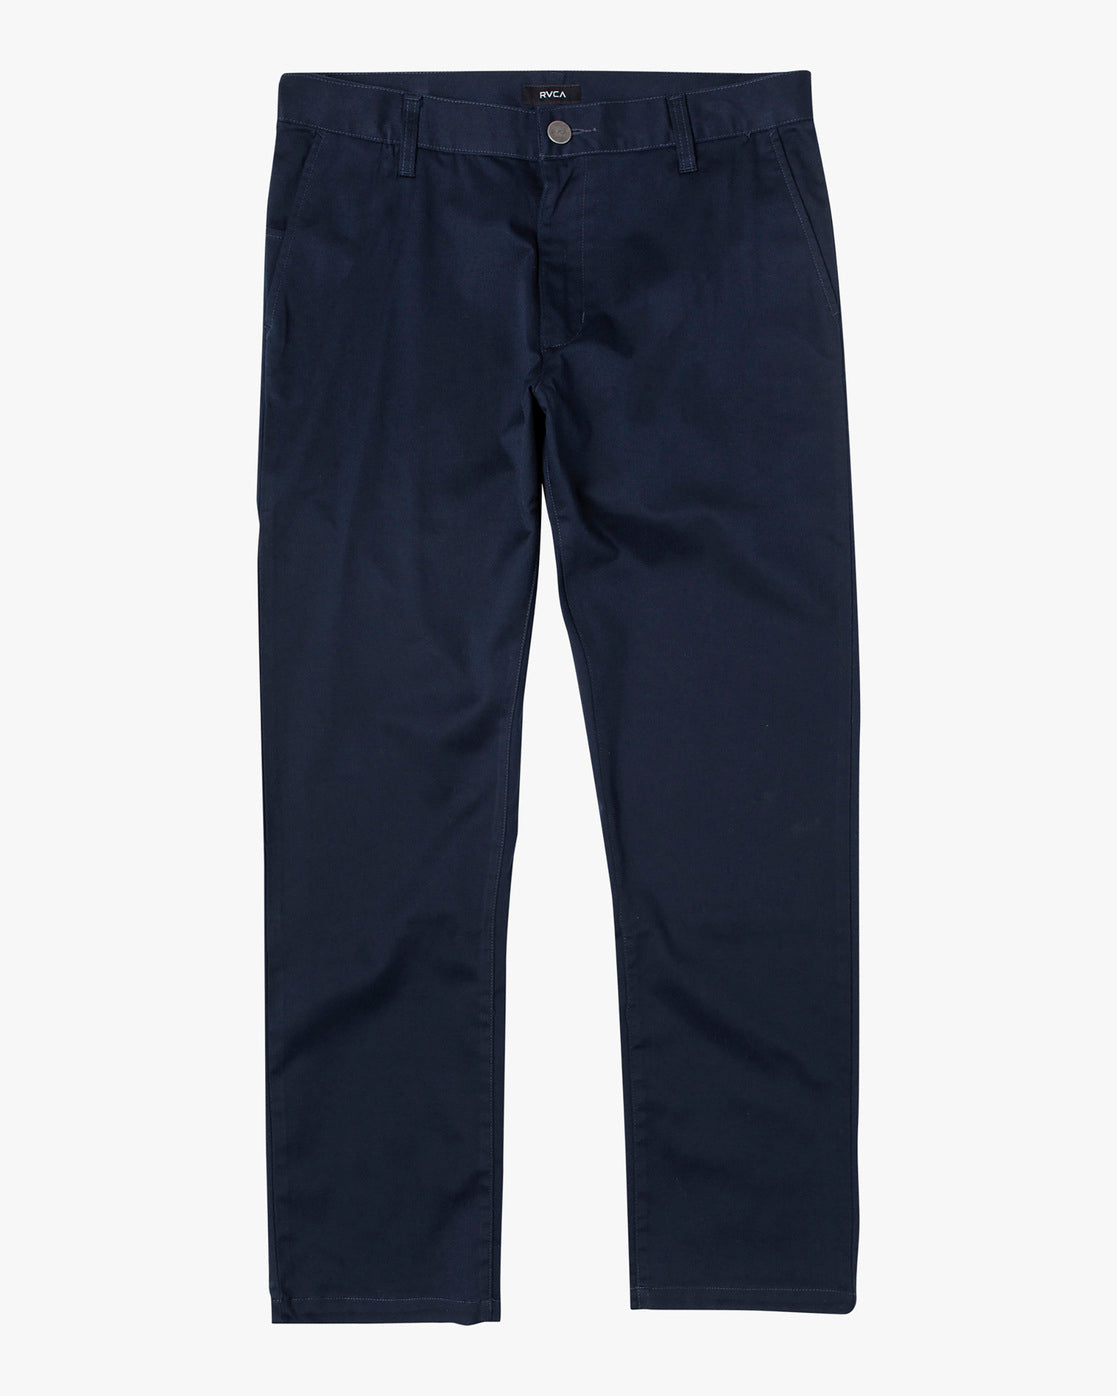 Men's Comfort Stretch Chino Pants, Standard Fit, Straight Leg | Pants at  L.L.Bean